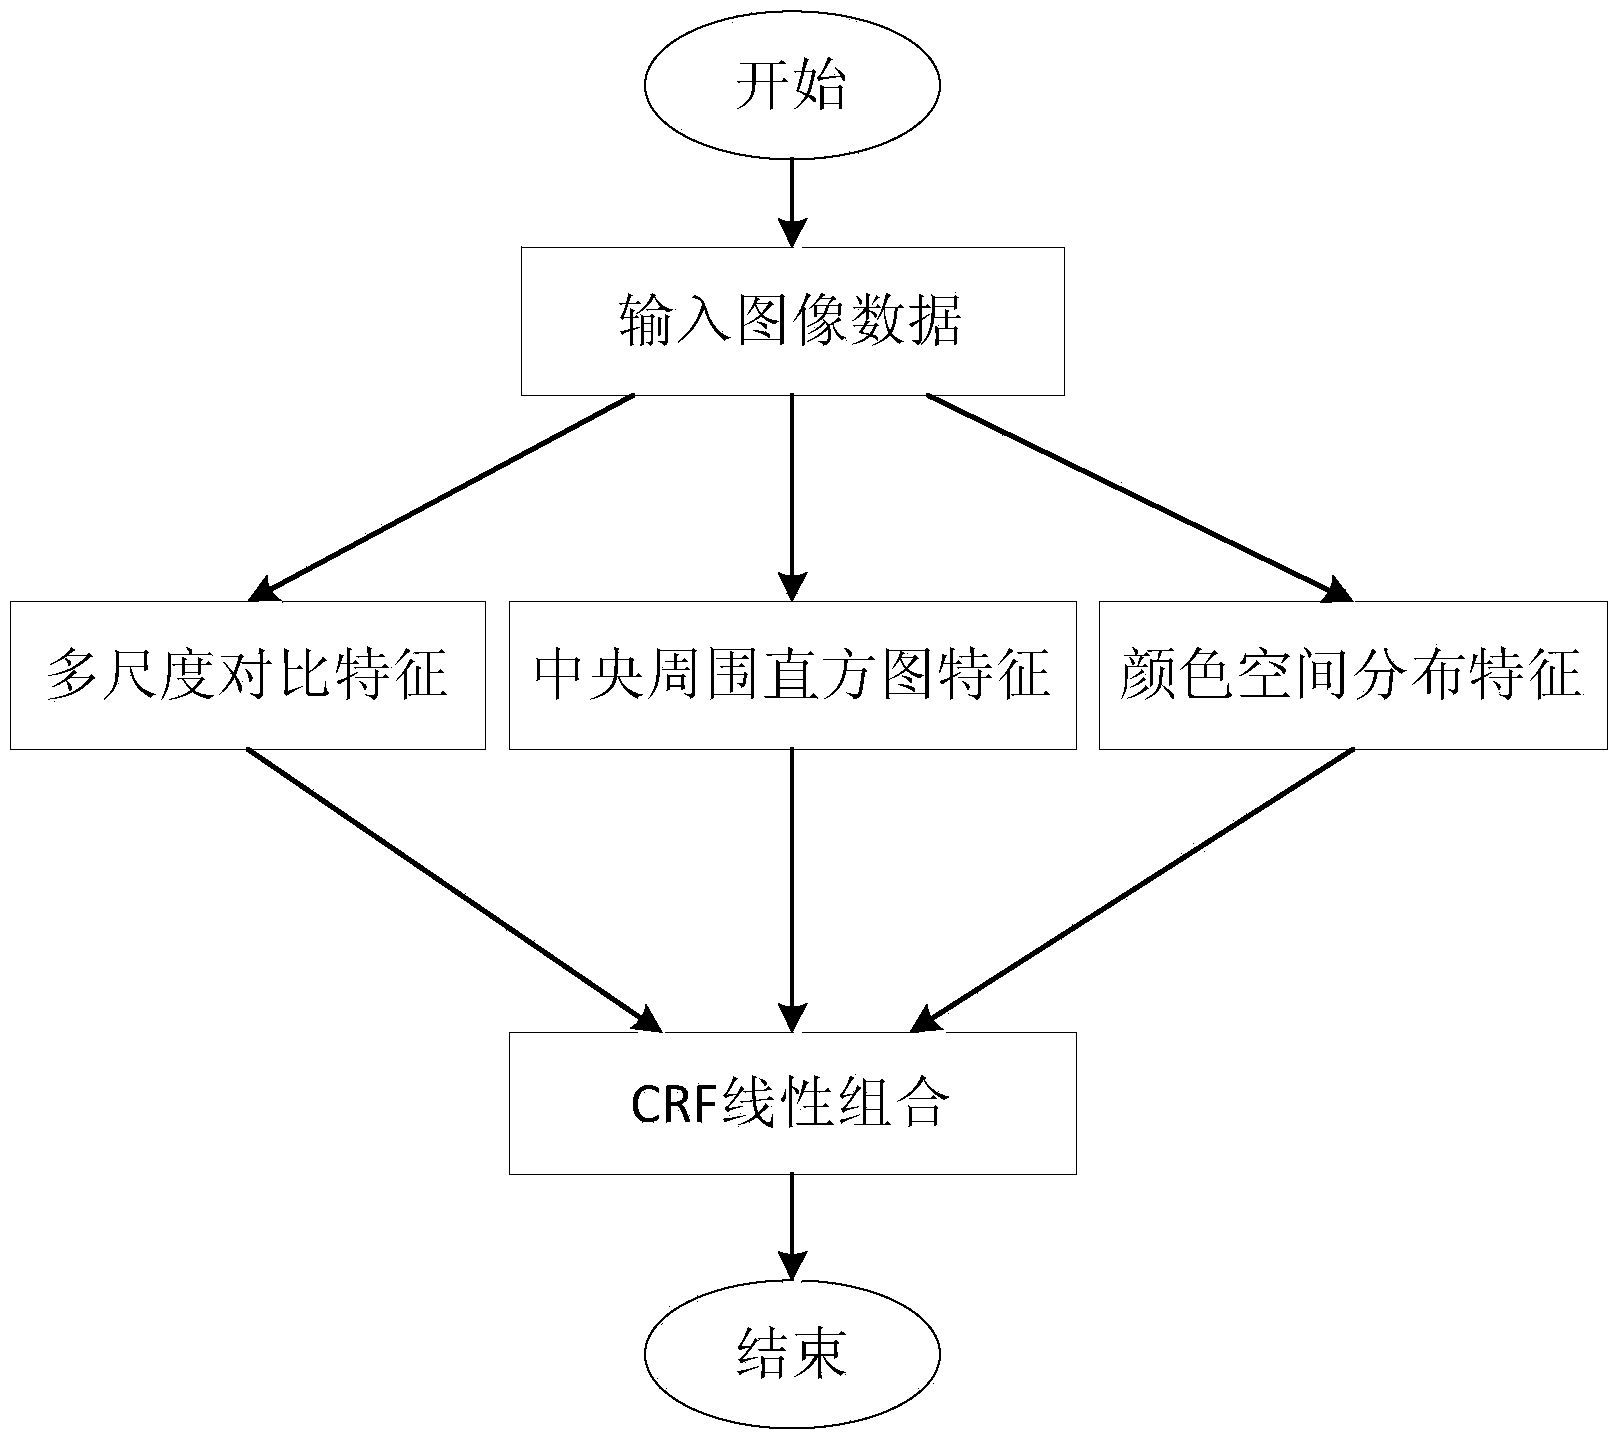 Saliency detection method based on conditional random field